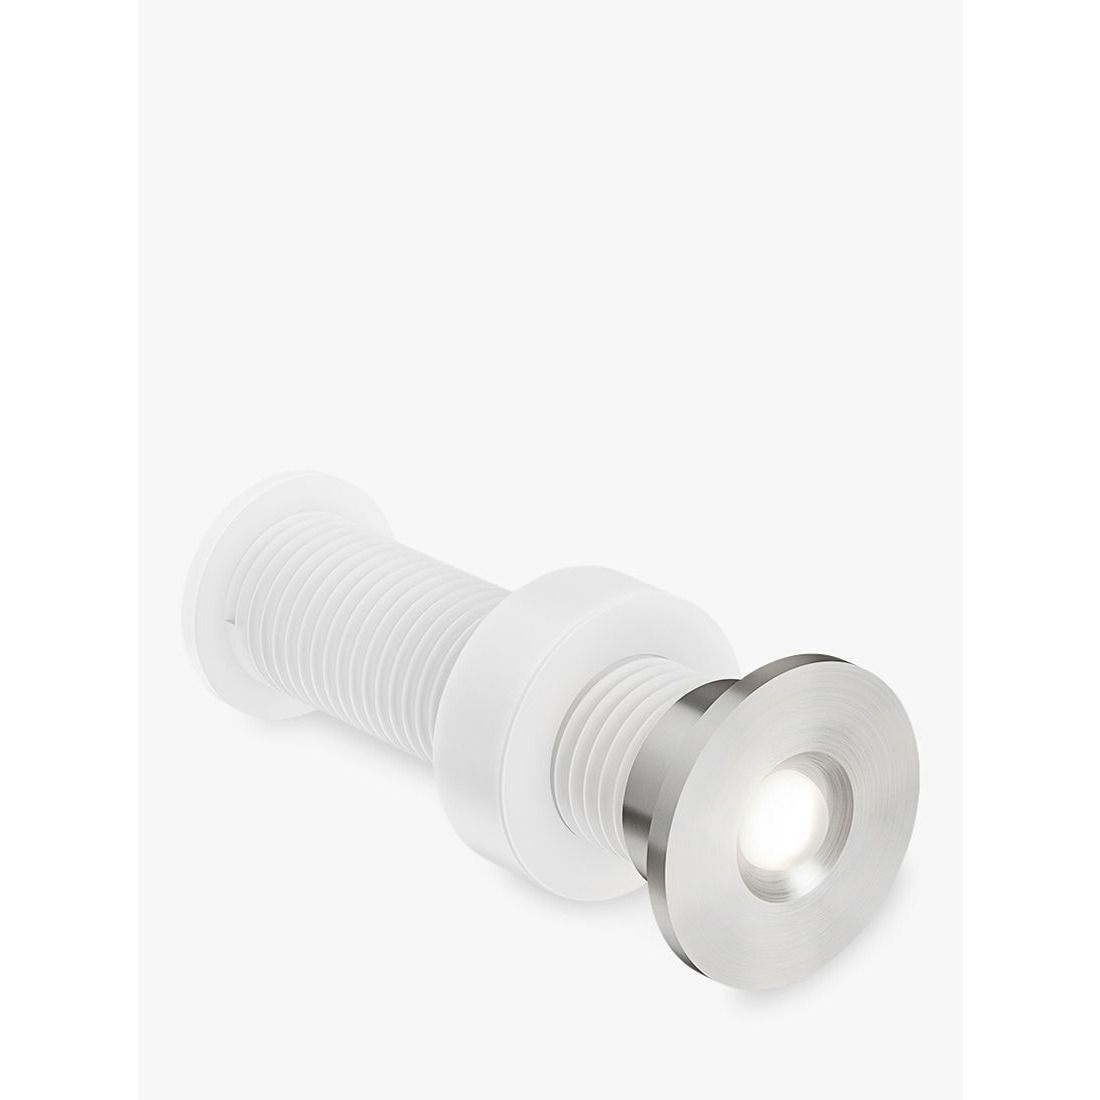 Sensio Iris LED Kitchen Round Plinth Light & Driver, Pack of 4, Natural White Light - image 1